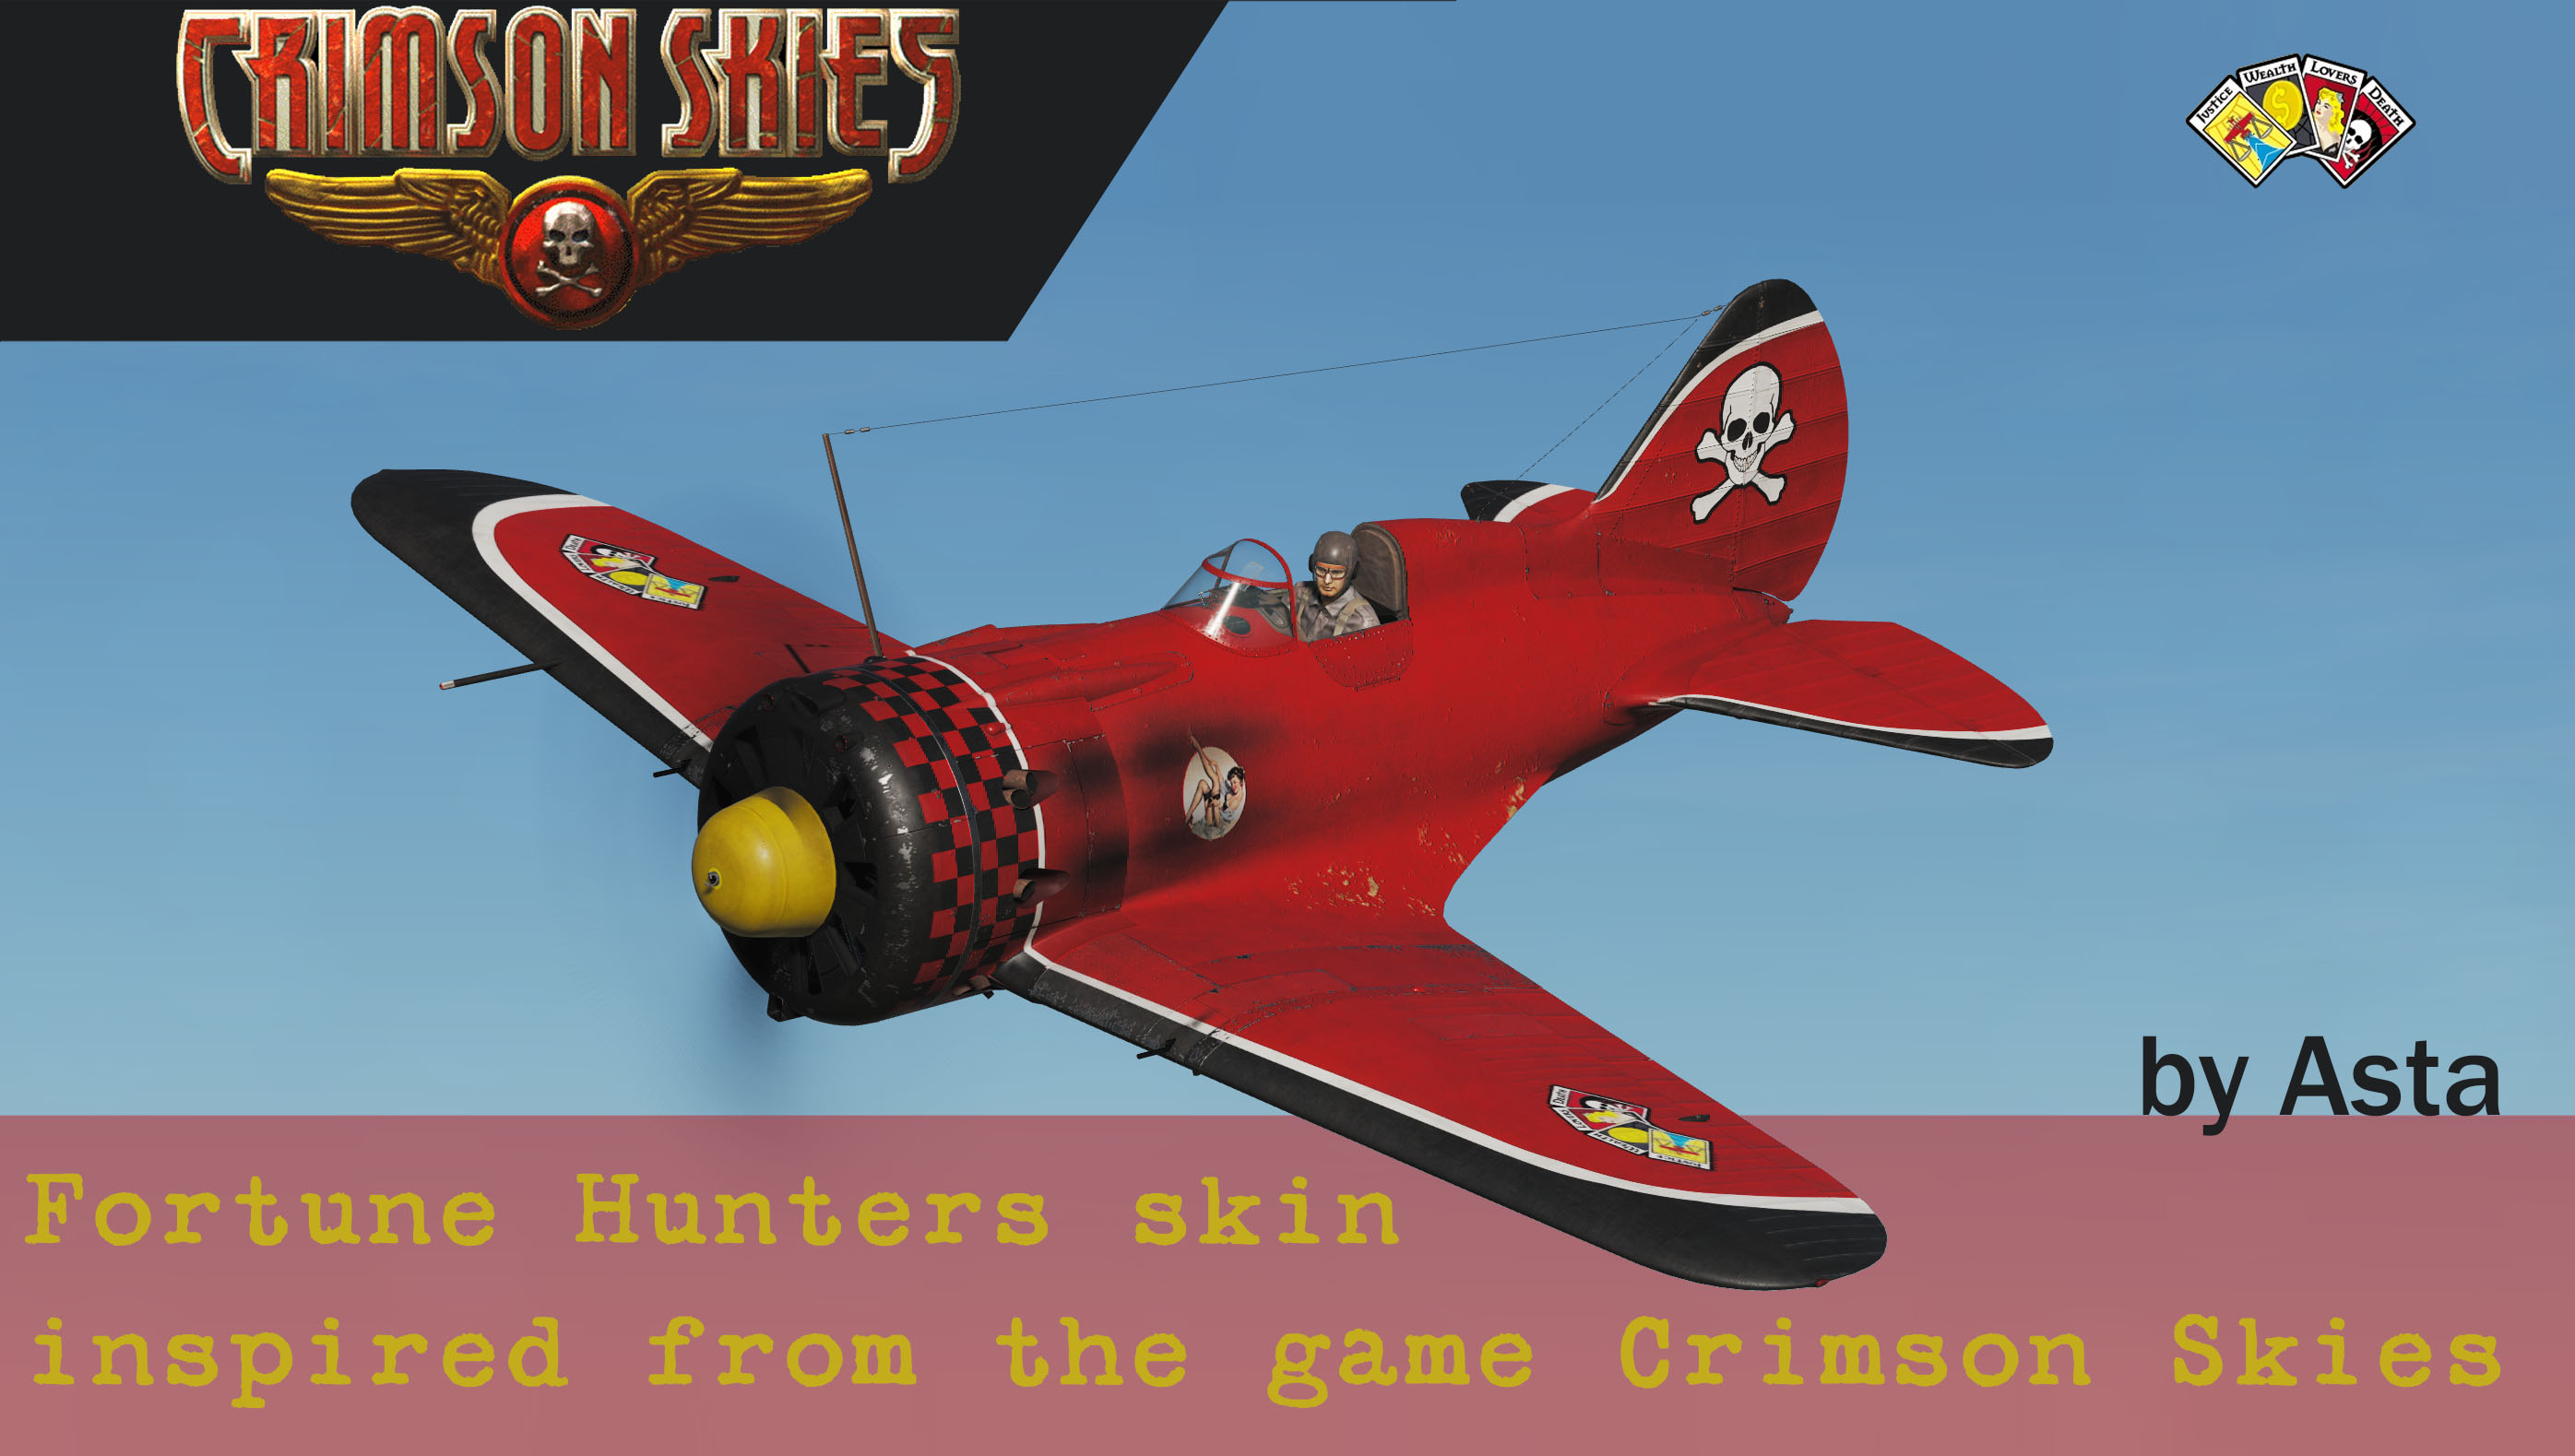 I-16 - Crimson Skies (Fortune hunters)